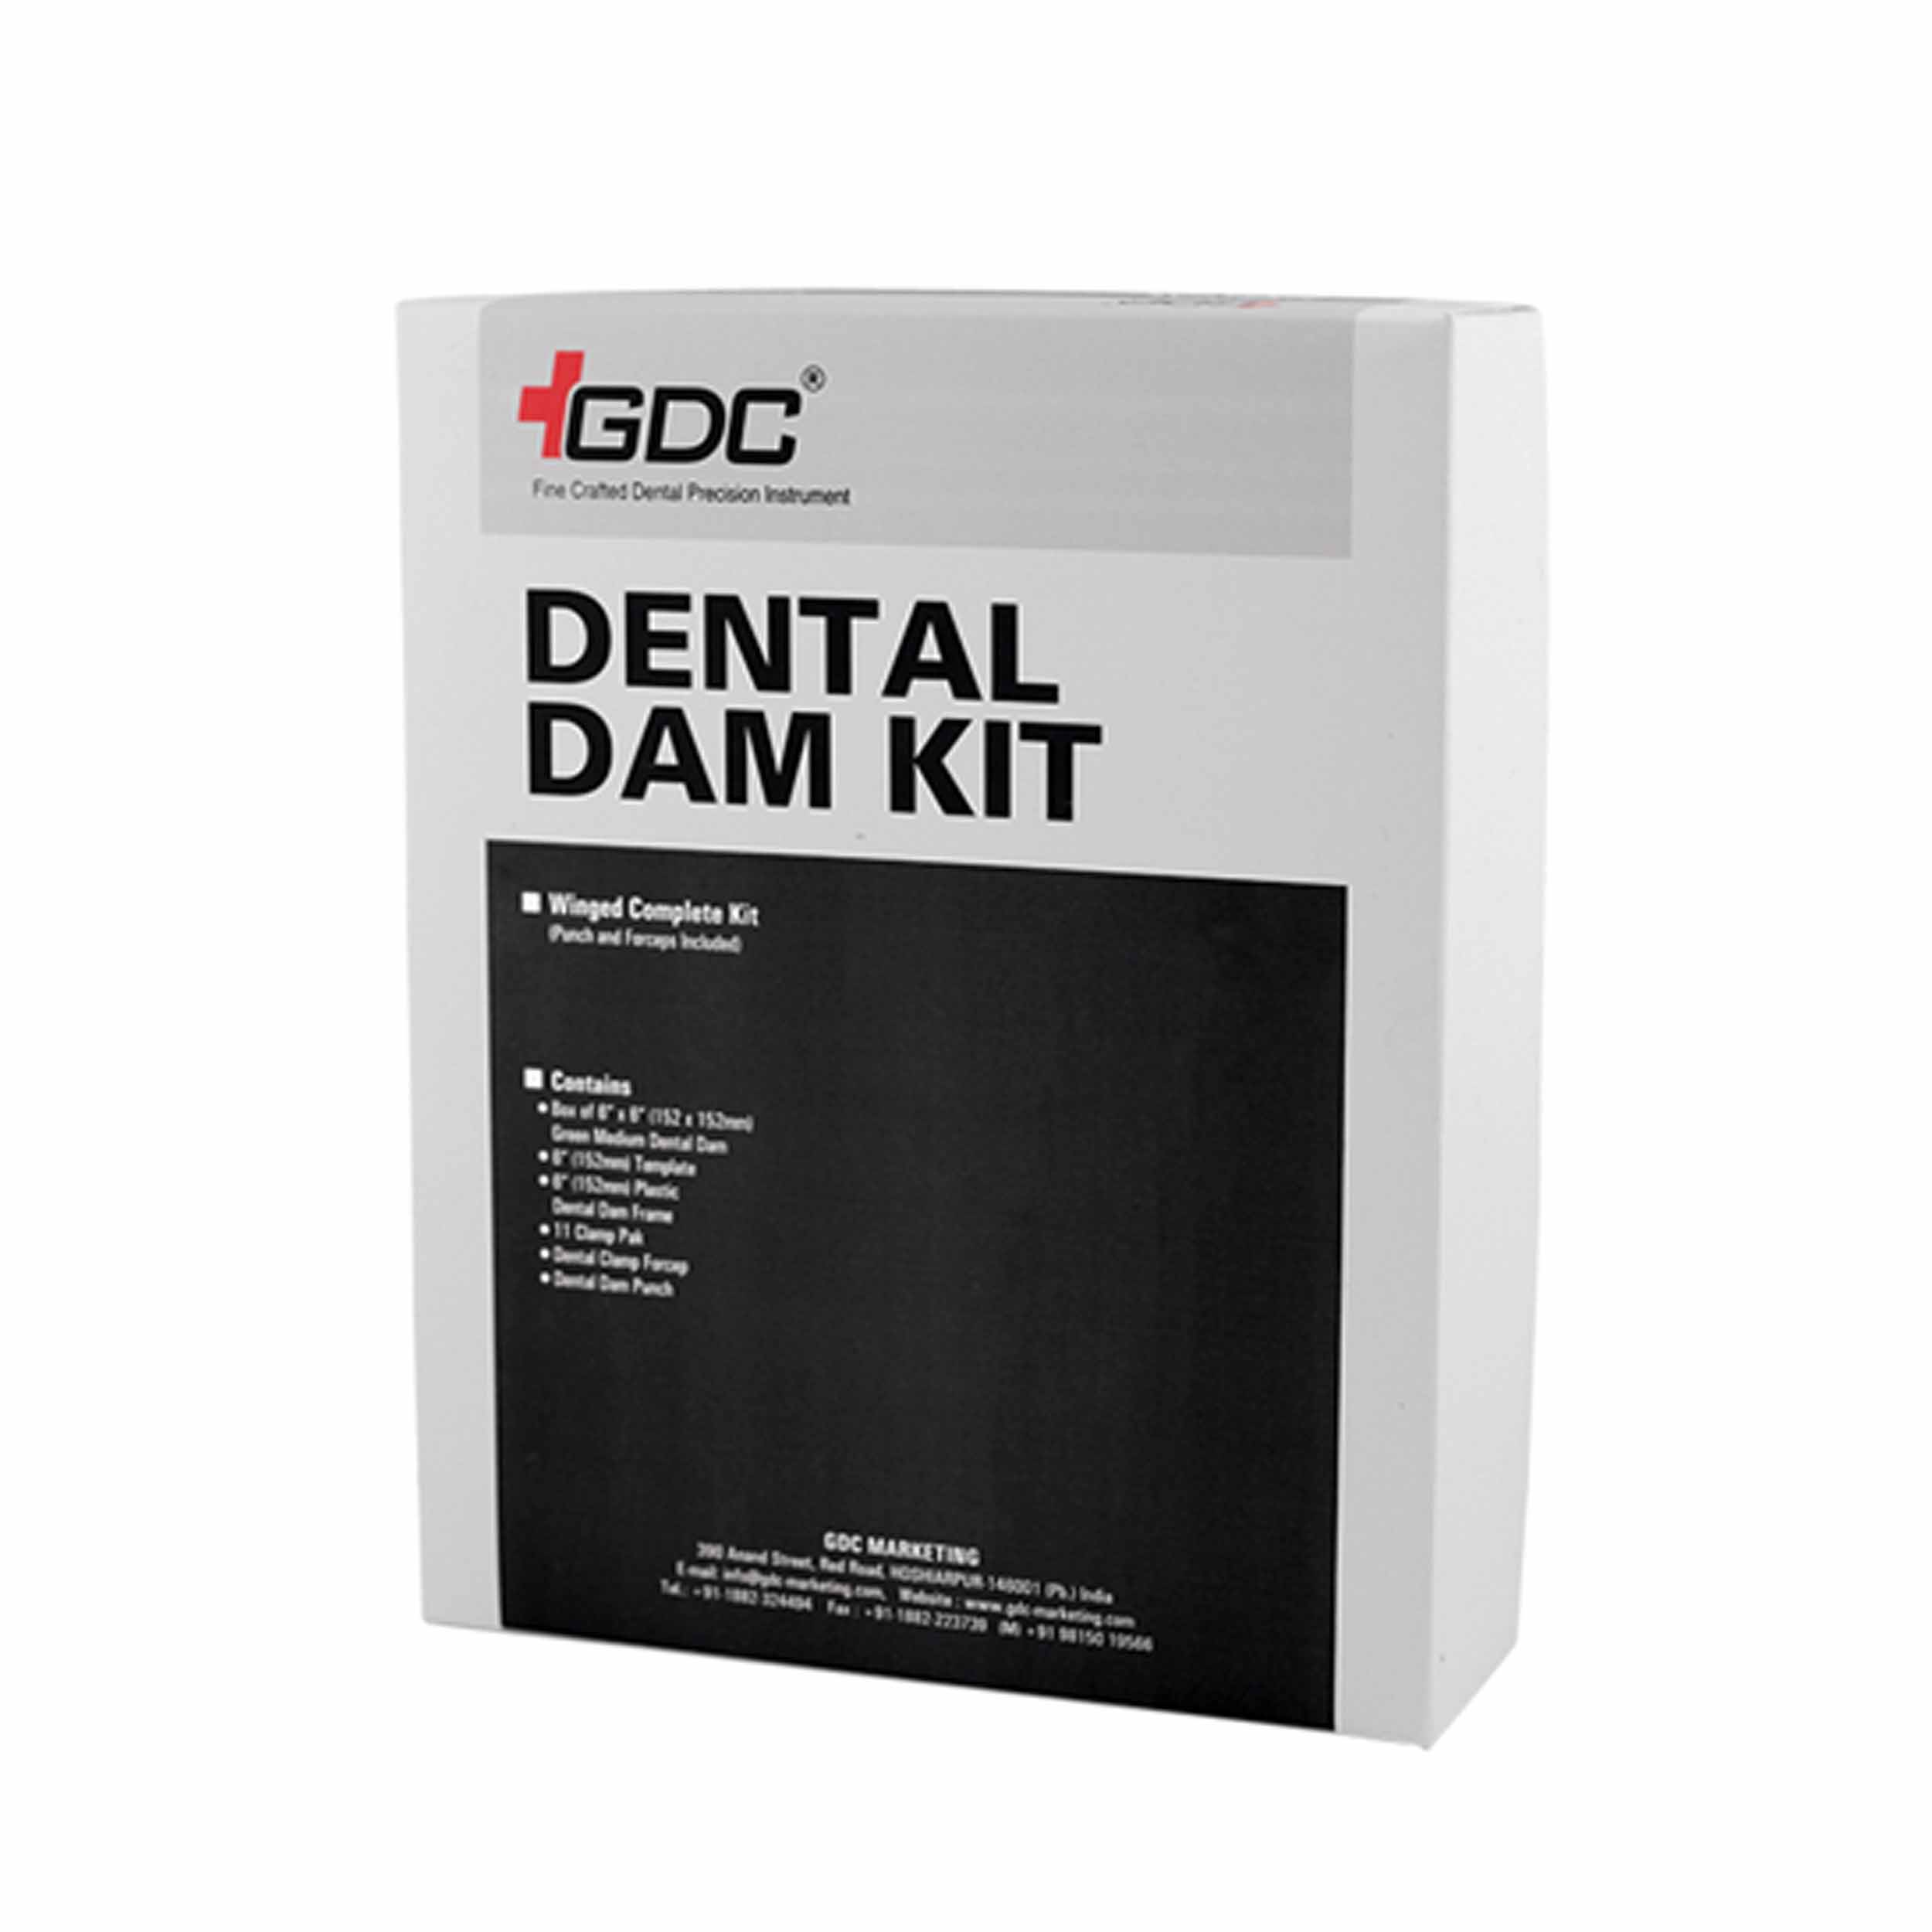 GDC Dental Dam Kit Adult